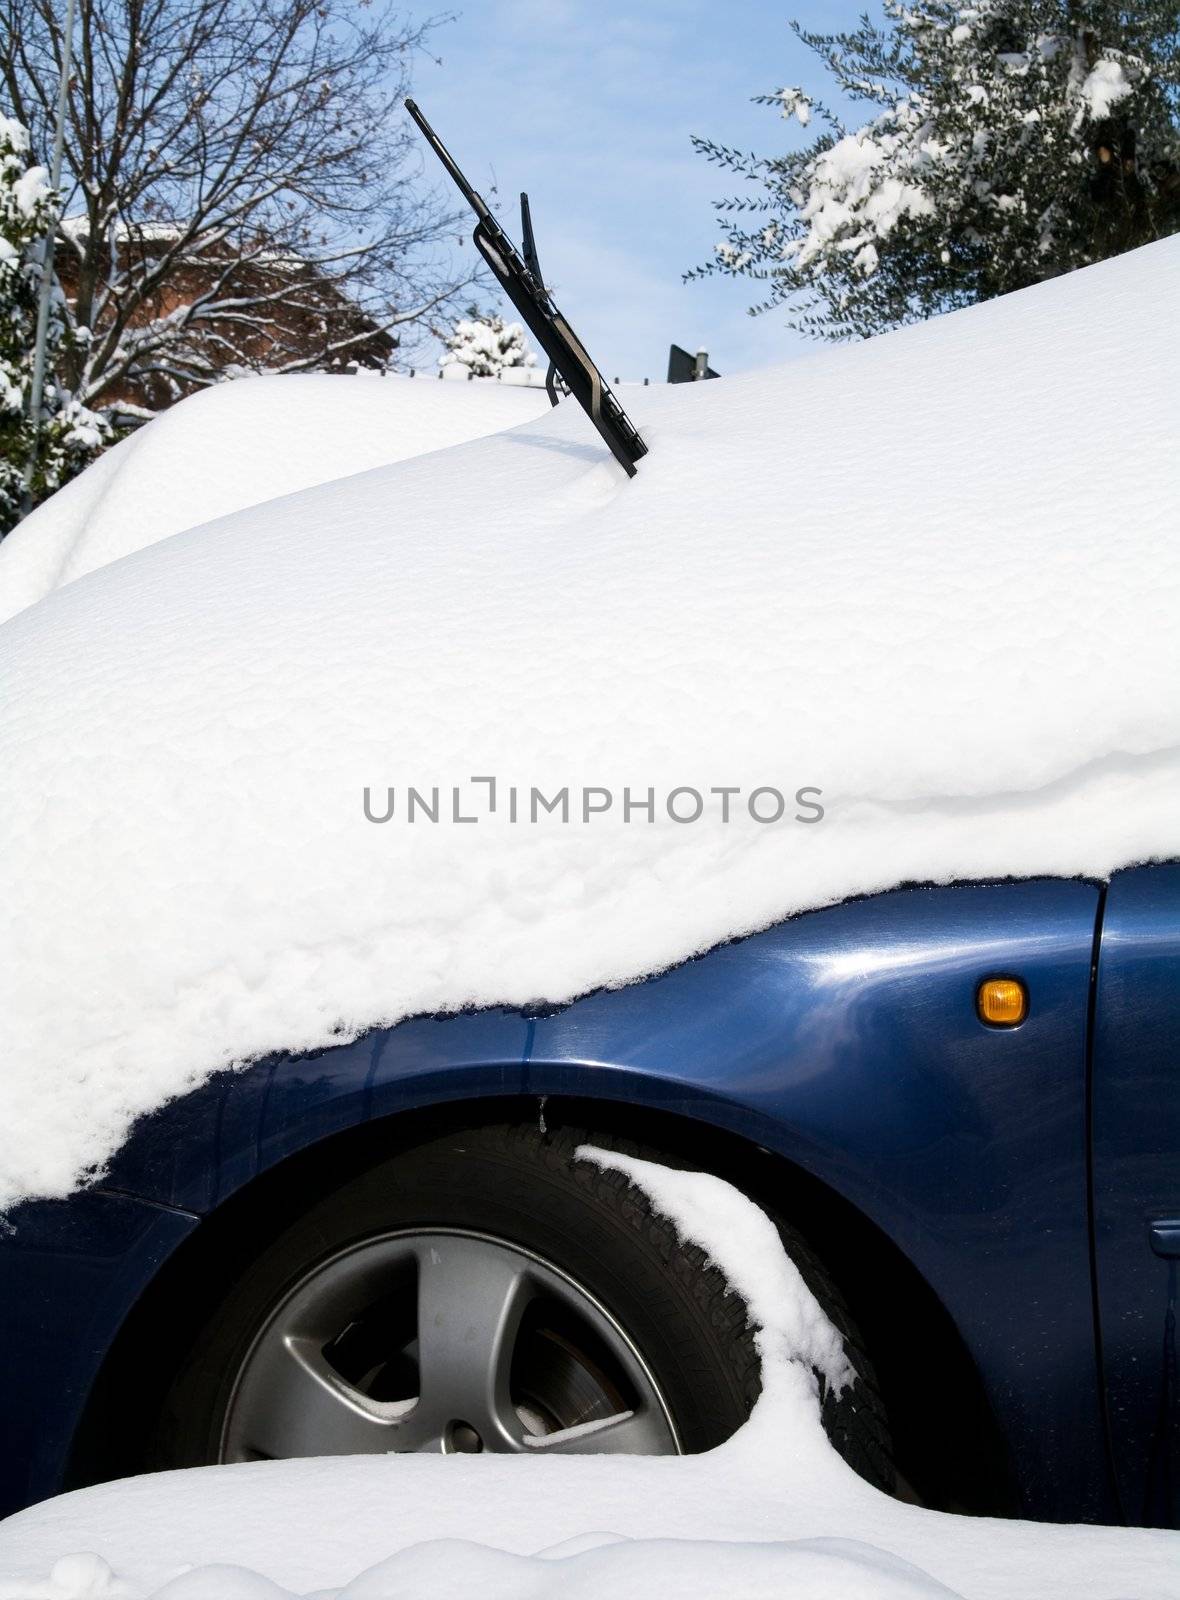 Car hidden in snow by baggiovara